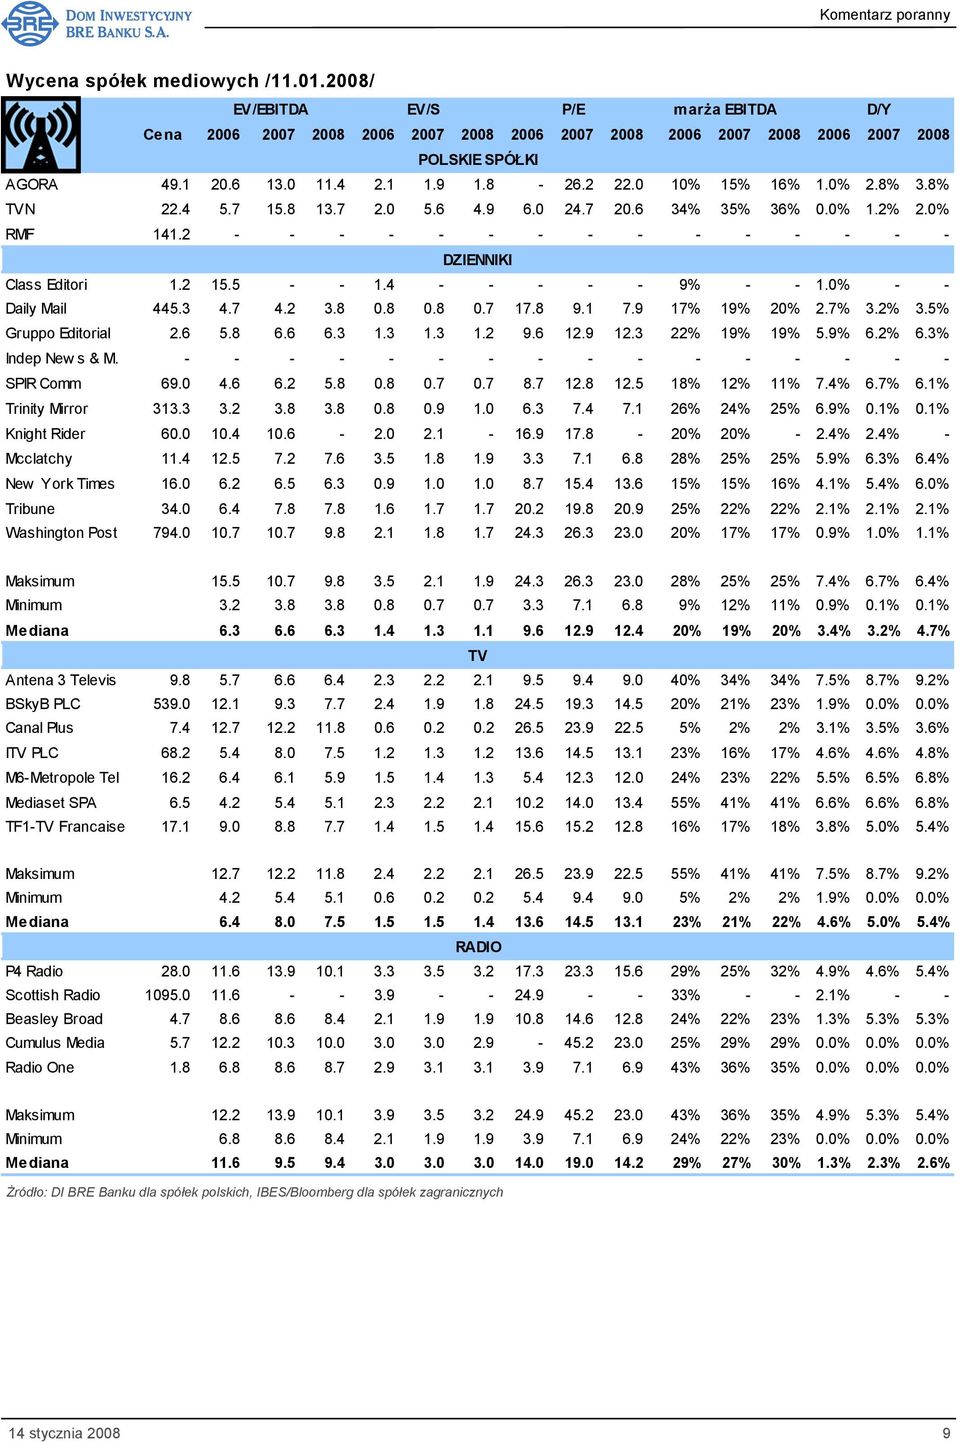 9 17% 19% 20% 2.7% 3.2% 3.5% Gruppo Editorial 2.6 5.8 6.6 6.3 1.3 1.3 1.2 9.6 12.9 12.3 22% 19% 19% 5.9% 6.2% 6.3% Indep New s & M. - - - - - - - - - - - - - - - - SPIR Comm 69.0 4.6 6.2 5.8 0.8 0.7 0.